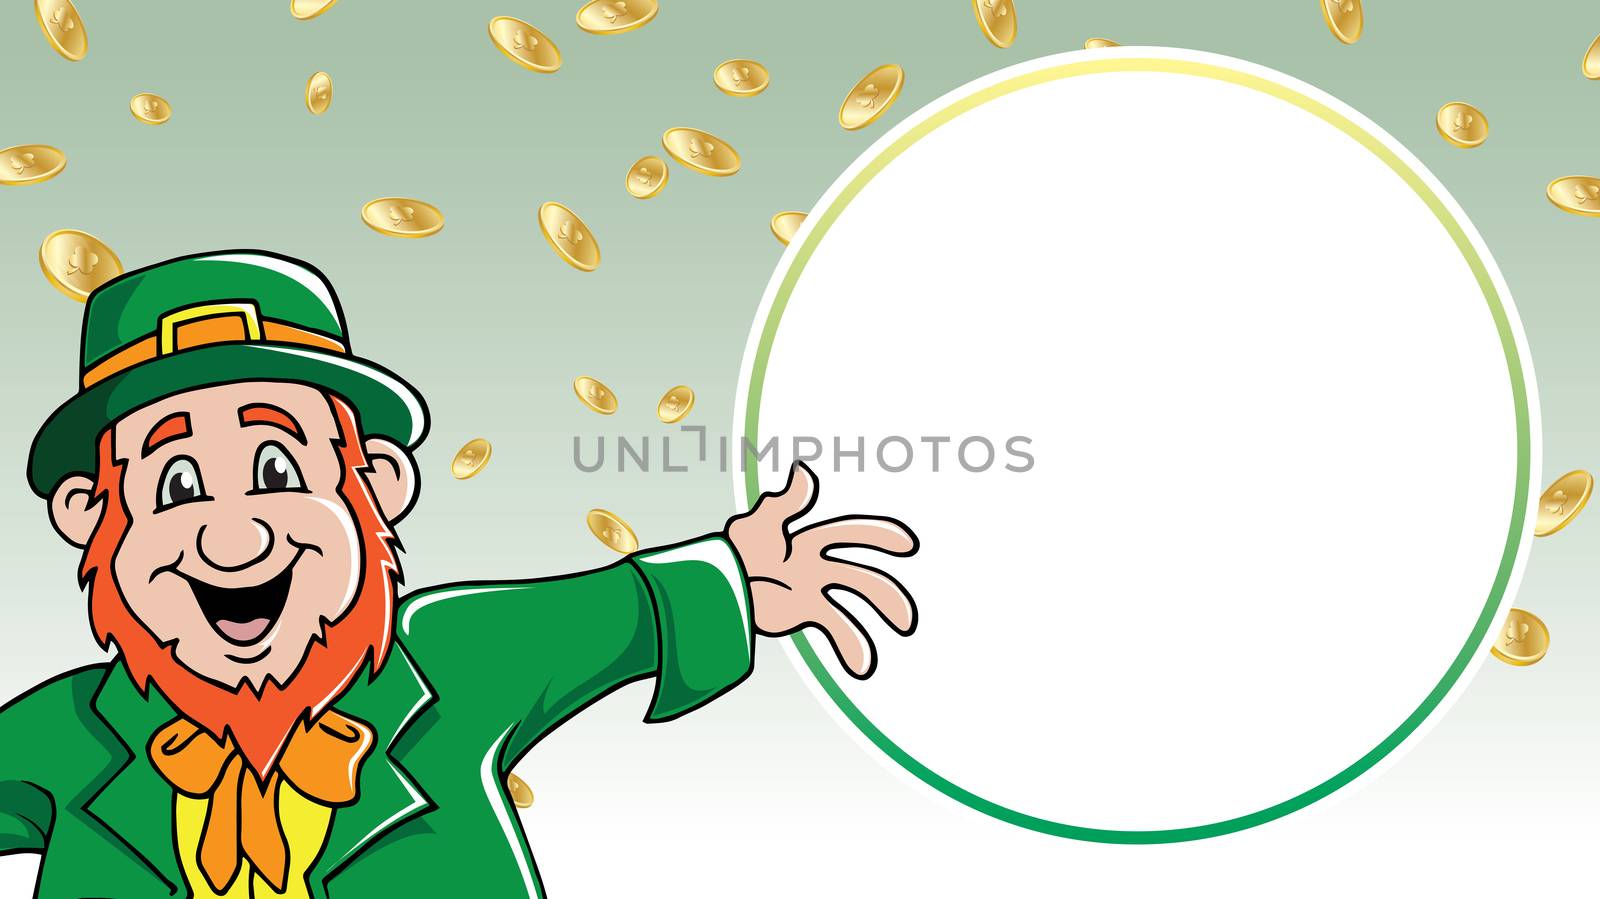 Saint Patrick's Day leprechaun shouting message among gold coins retail sale